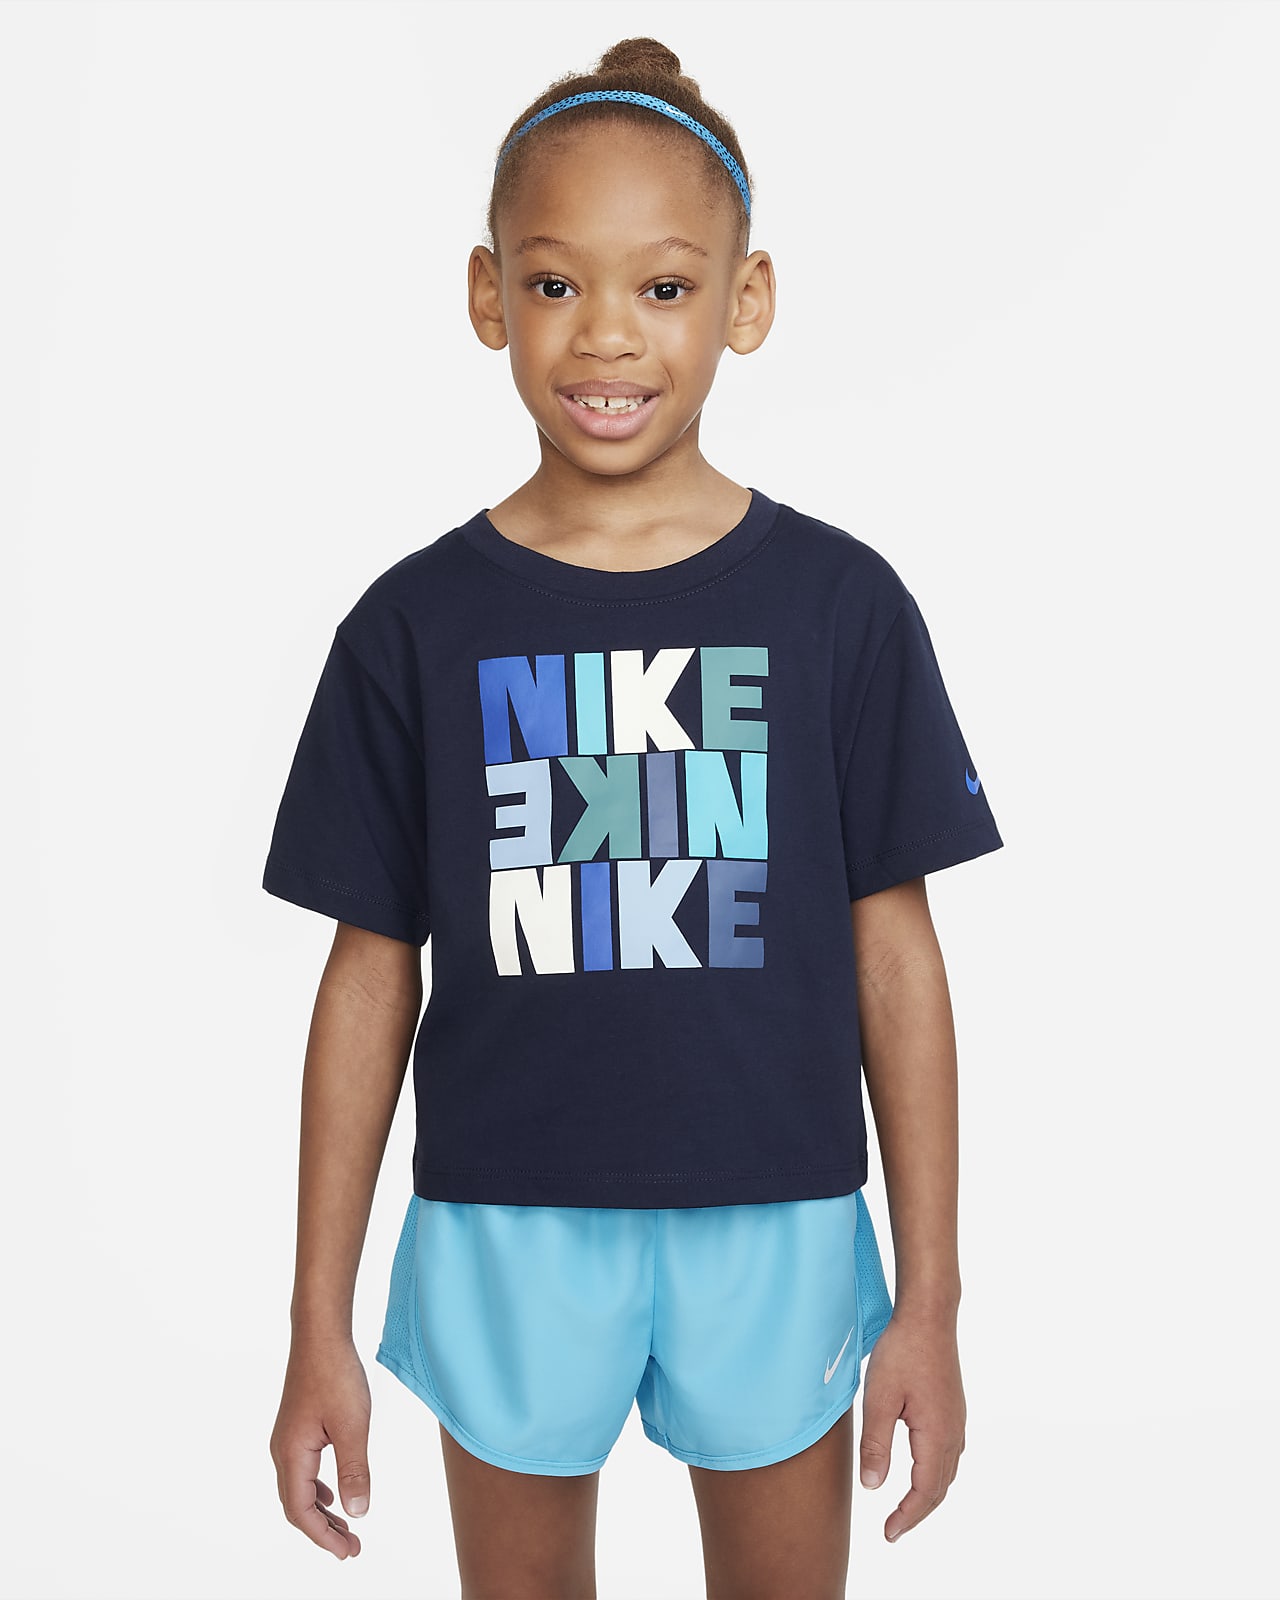 Versnellen Troosteloos Ongeautoriseerd Nike Snack Pack Boxy Tee Little Kids' T-Shirt. Nike.com